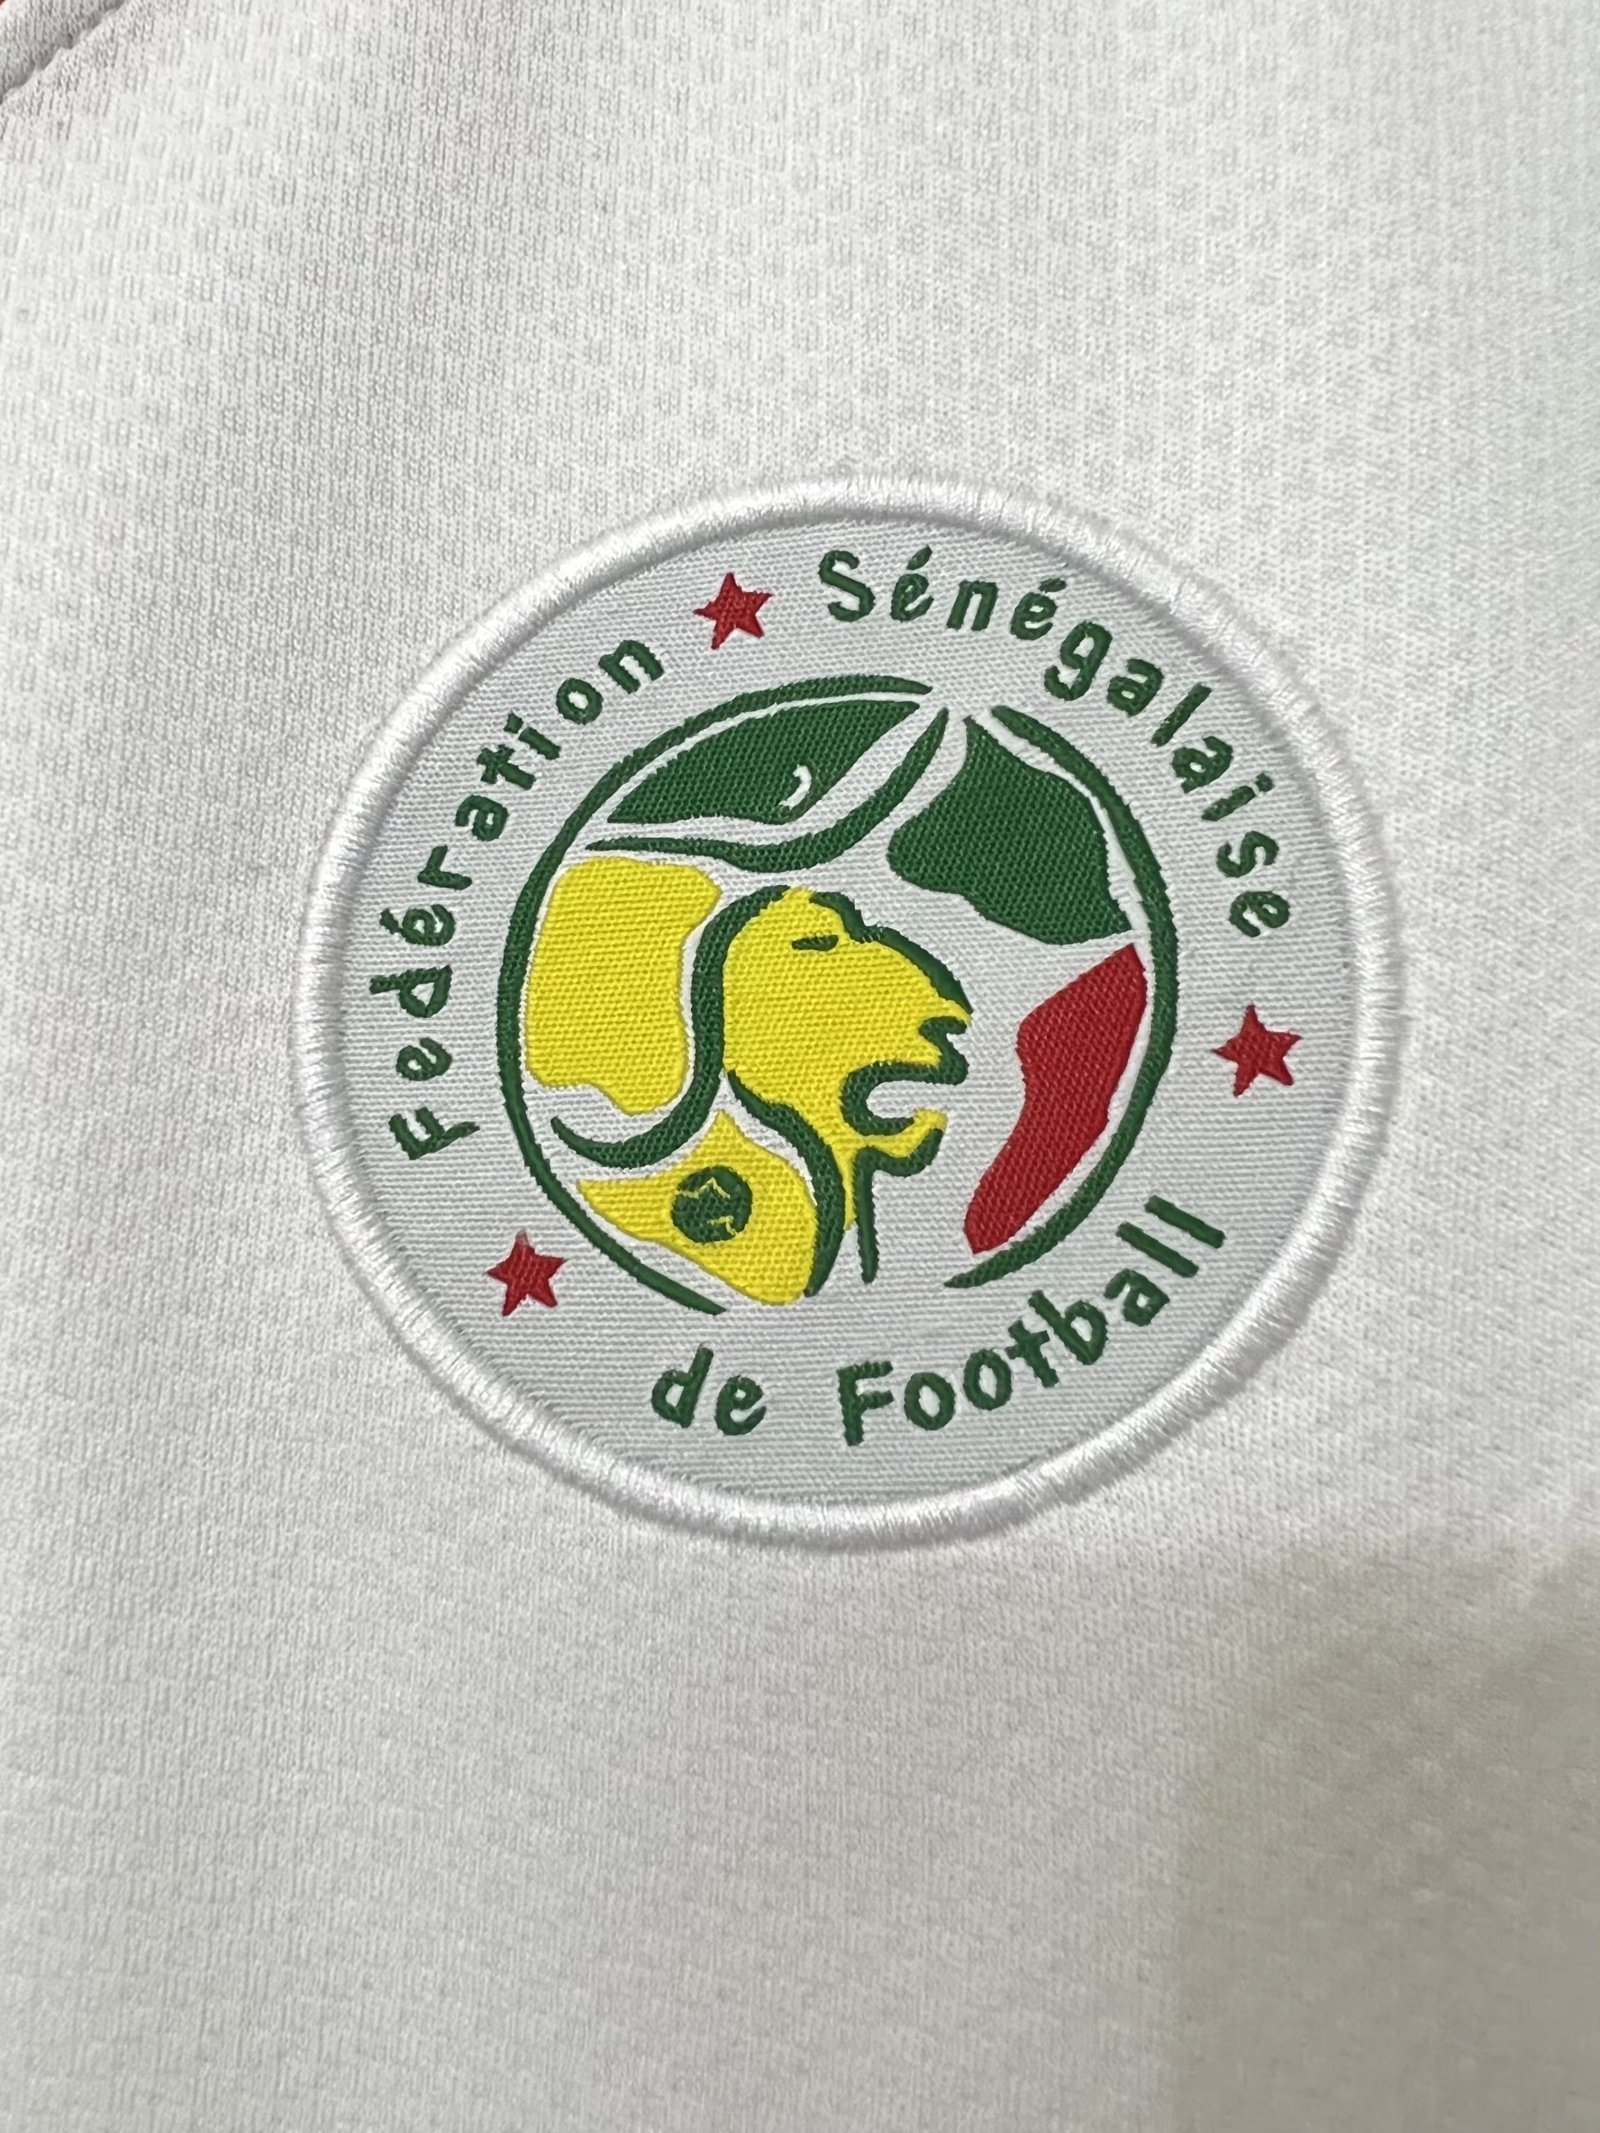 Senegal Soccer Jersey Replica Retro Away Mens 2002